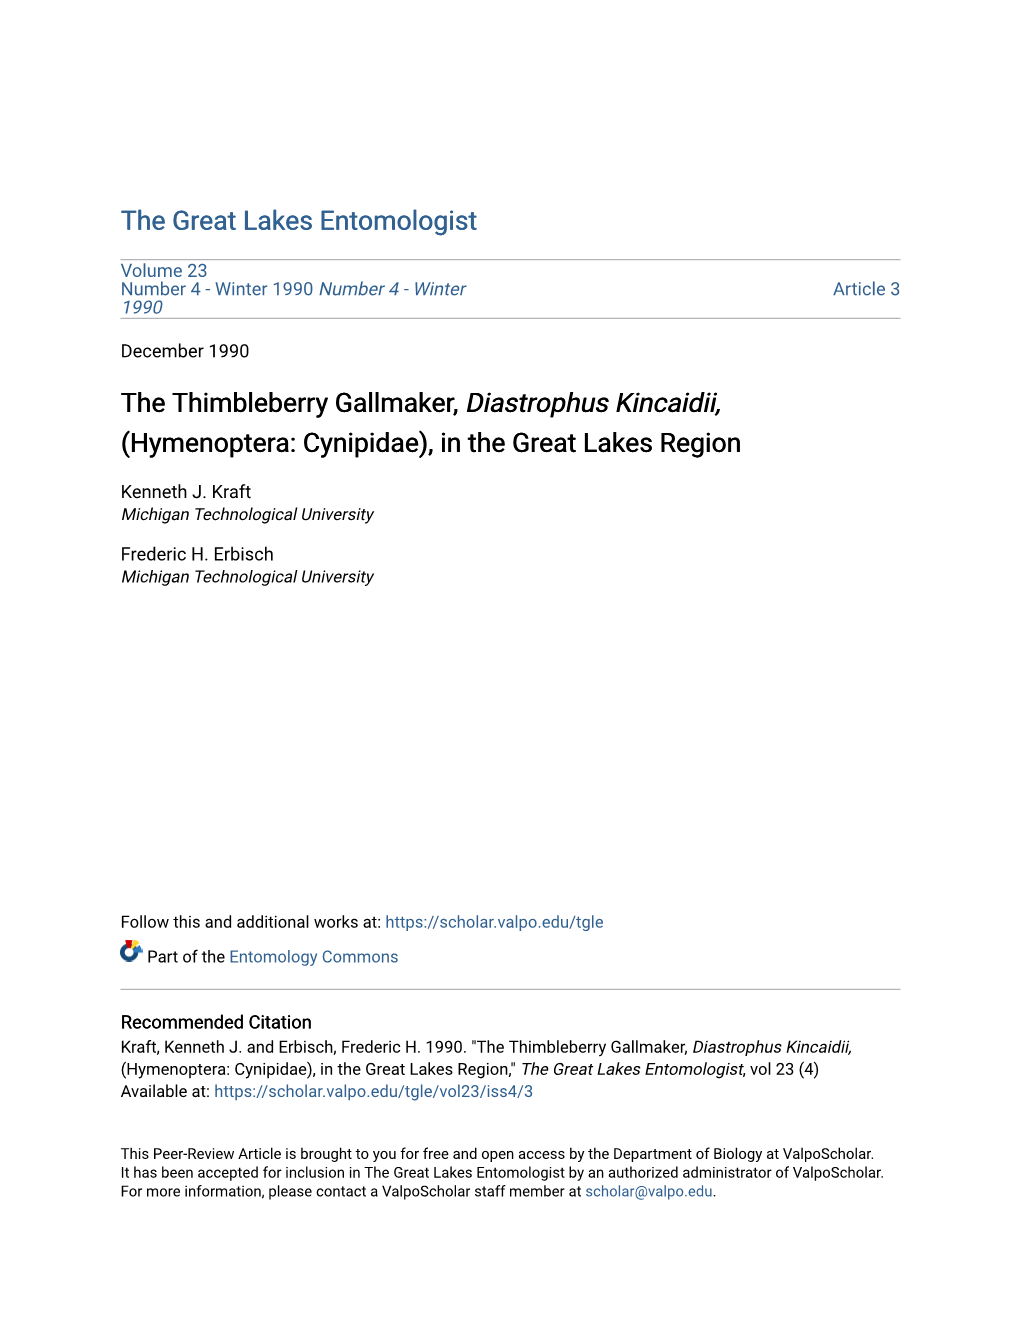 The Thimbleberry Gallmaker, Diastrophus Kincaidii, (Hymenoptera: Cynipidae), in the Great Lakes Region